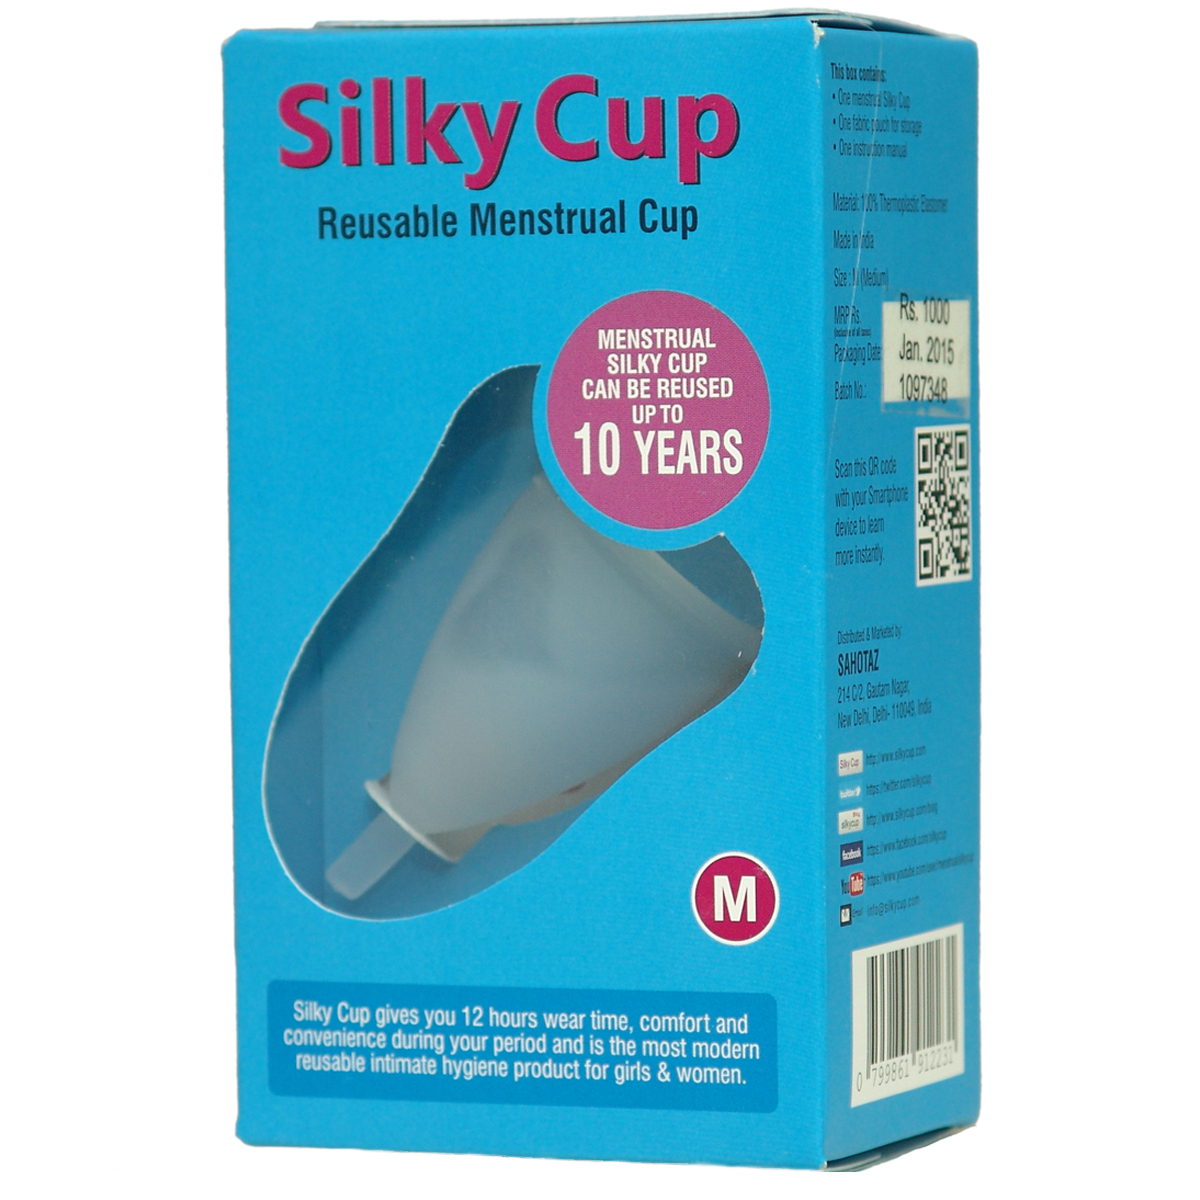 Silky Cup Reusable Menstrual Cup alternative sanitary napkins